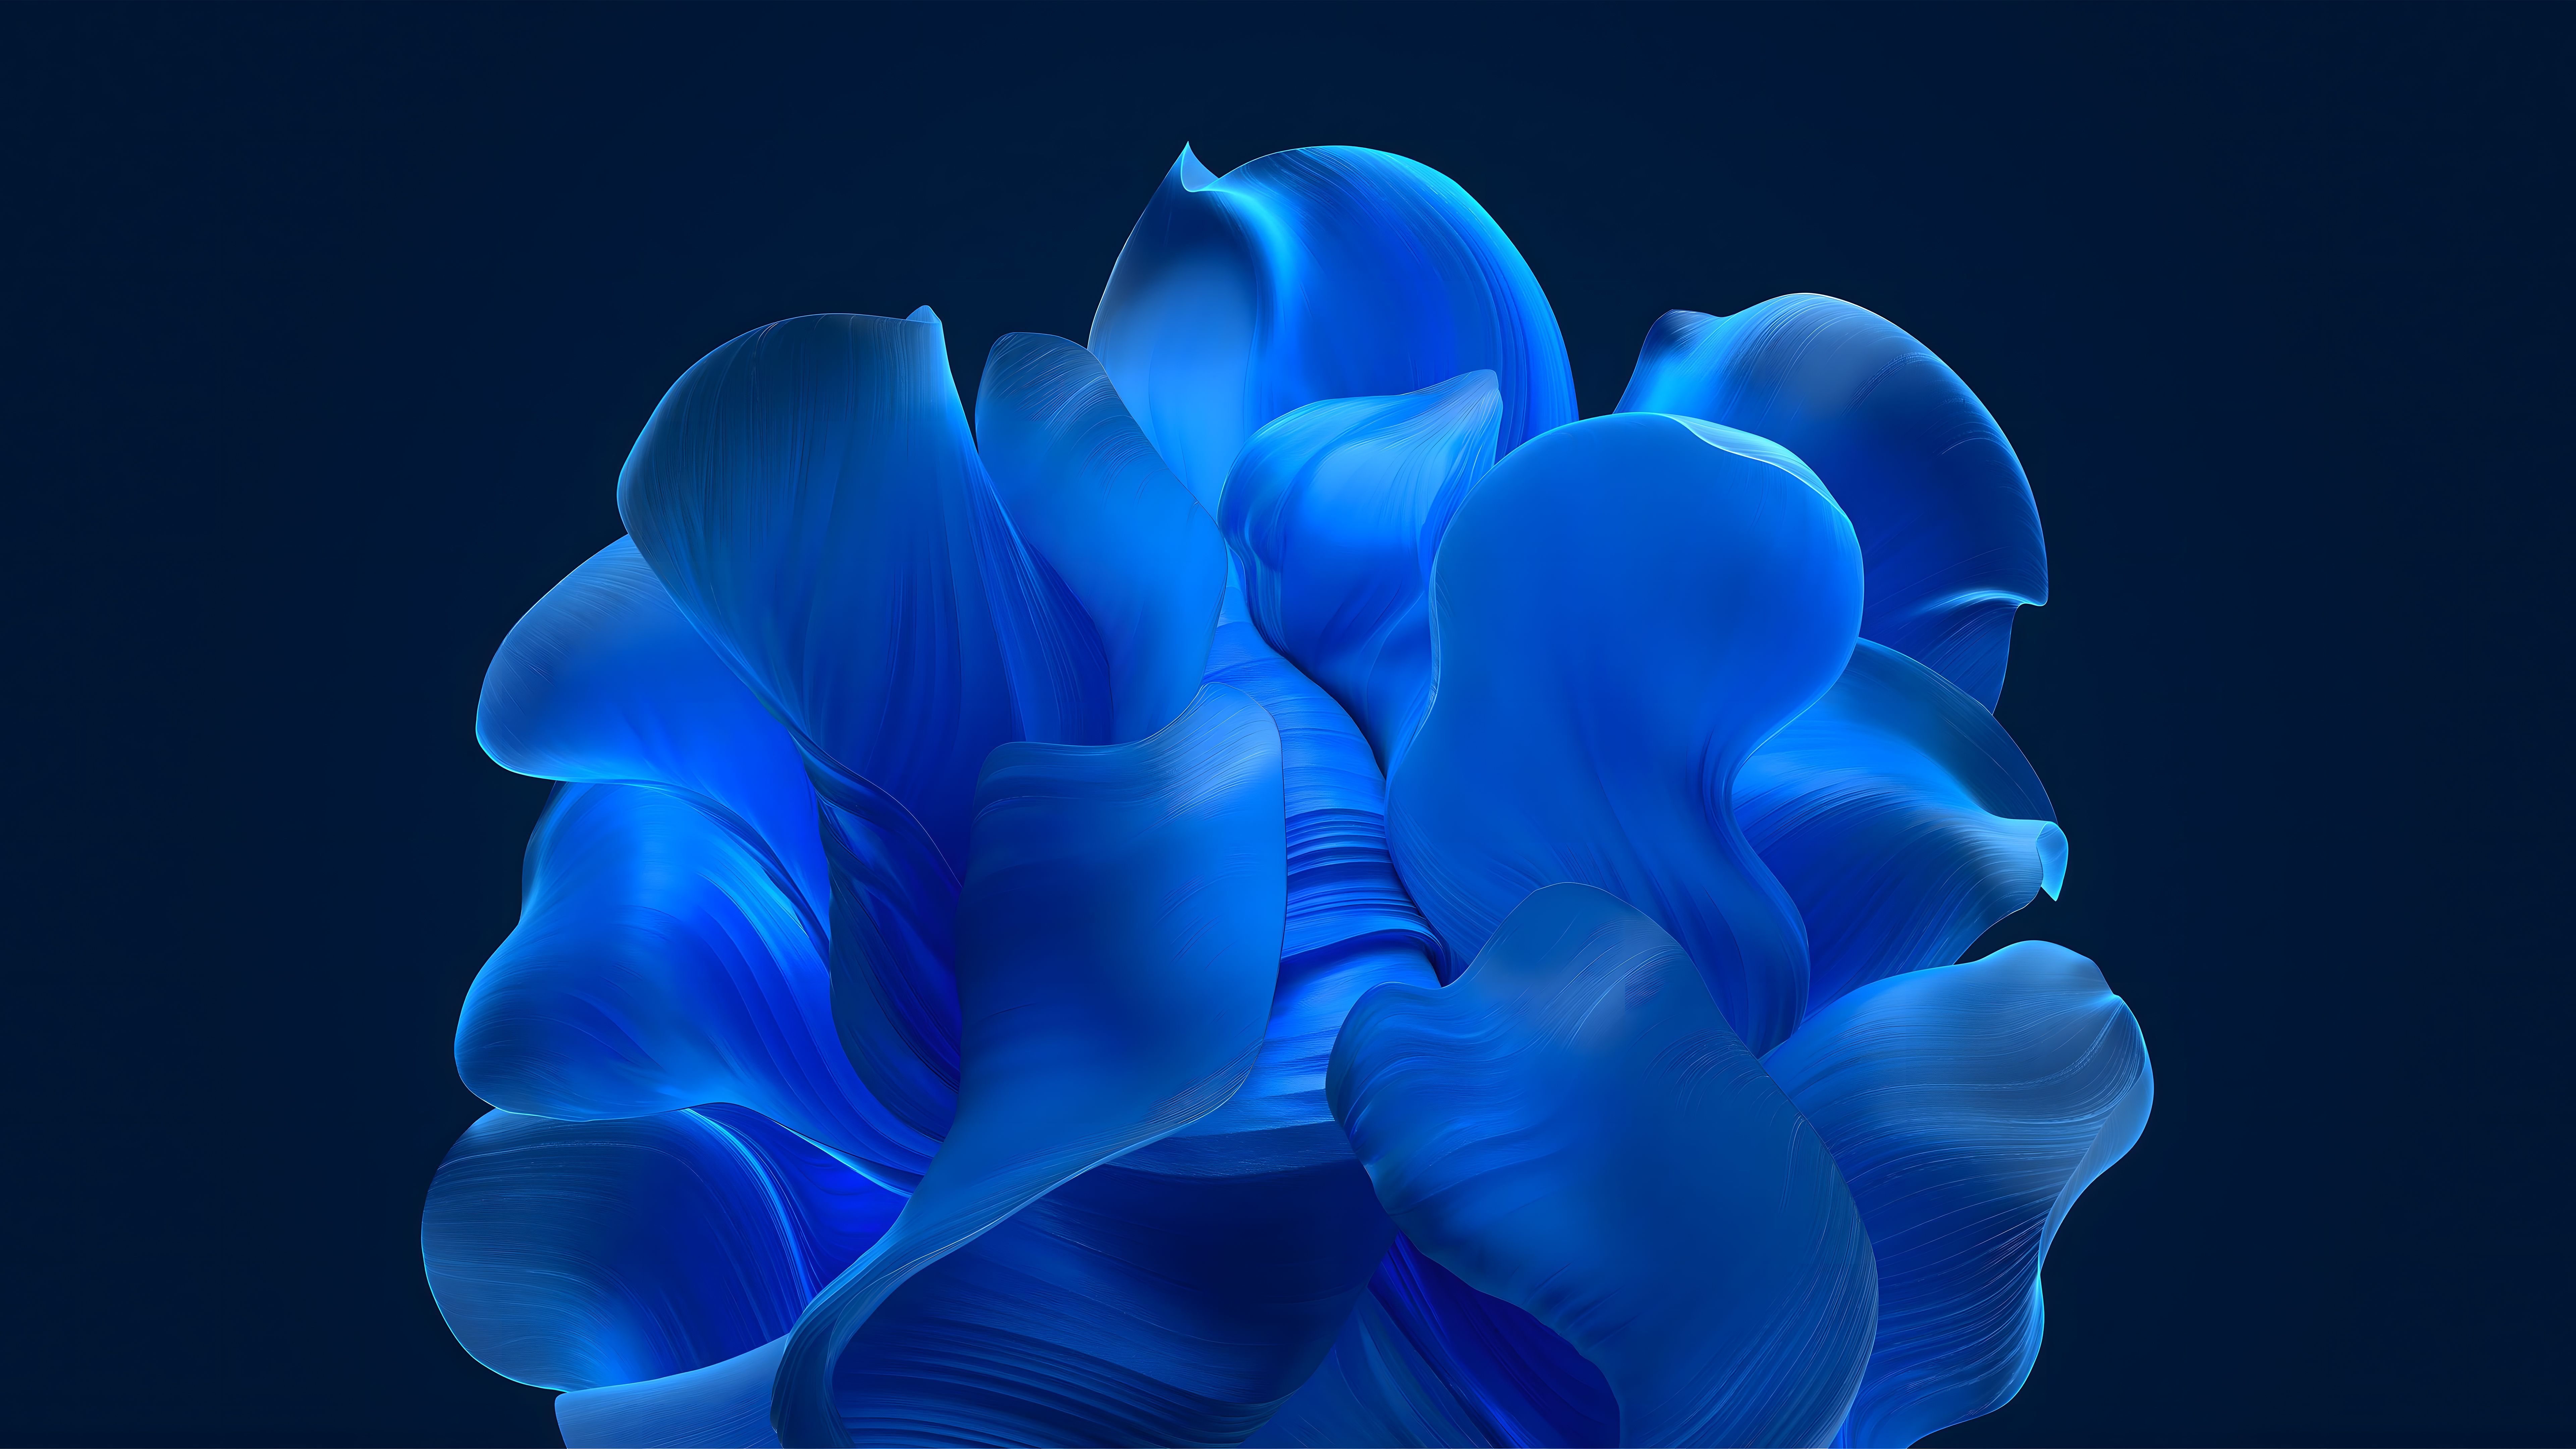 A close-up of a flower made of blue glass - Blue